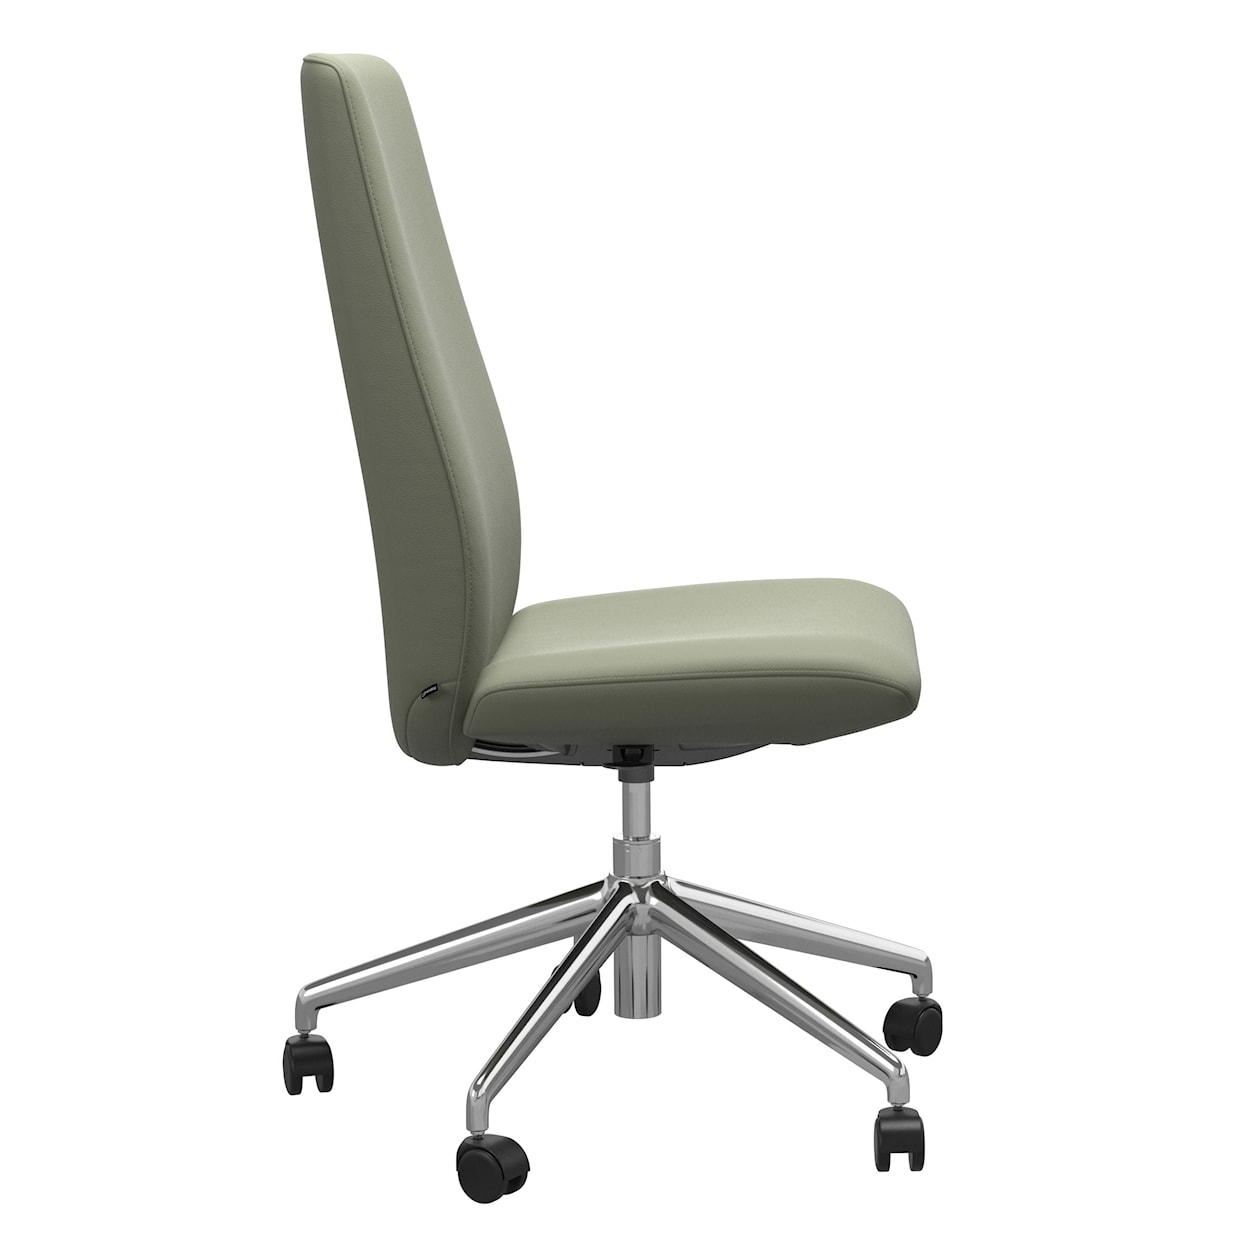 Stressless by Ekornes Laurel Laurel Large High-Back Office Chair